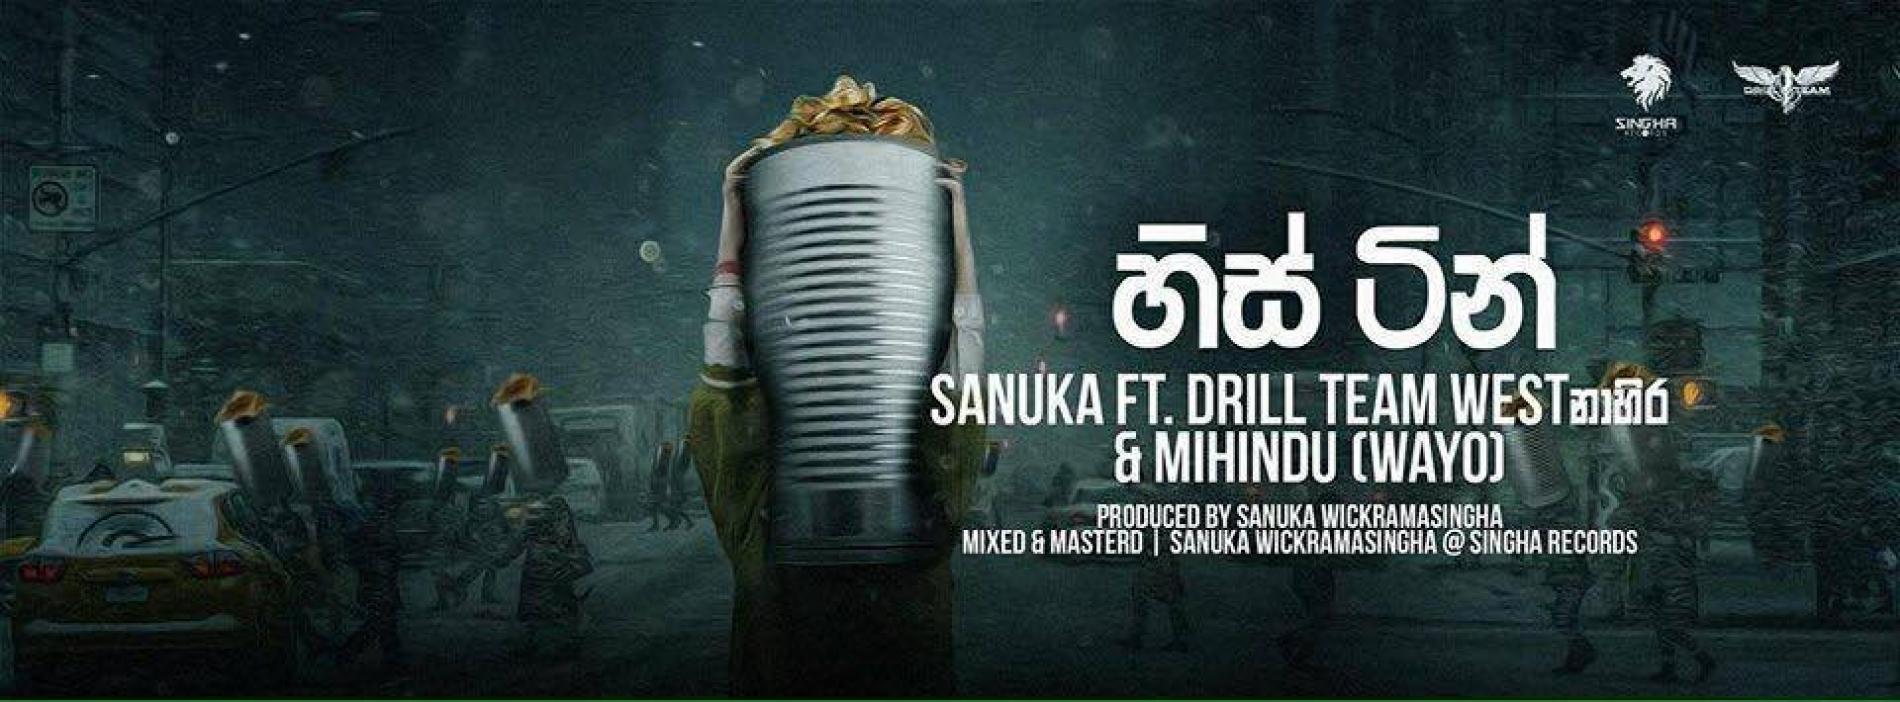 New Music By Sanuka, The Drill Team & Mihindu (Wayo)